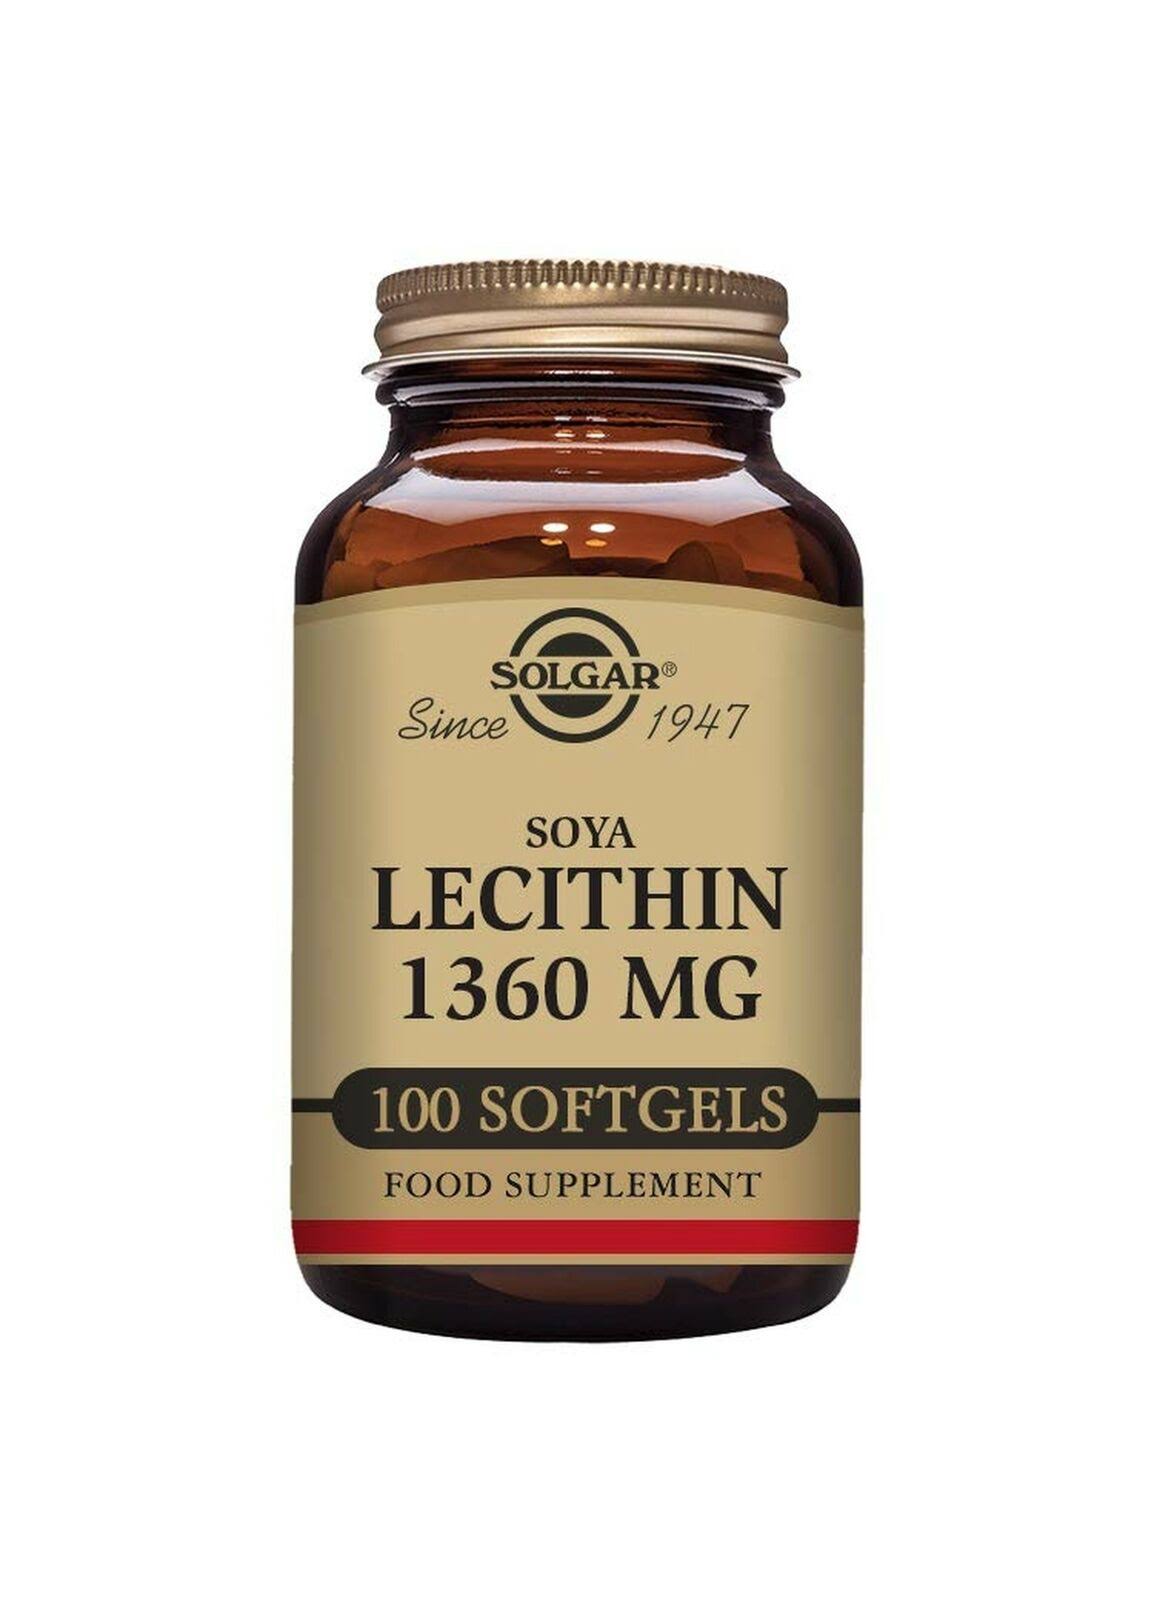 Solgar Lecithin Capsules - 100 Softgels